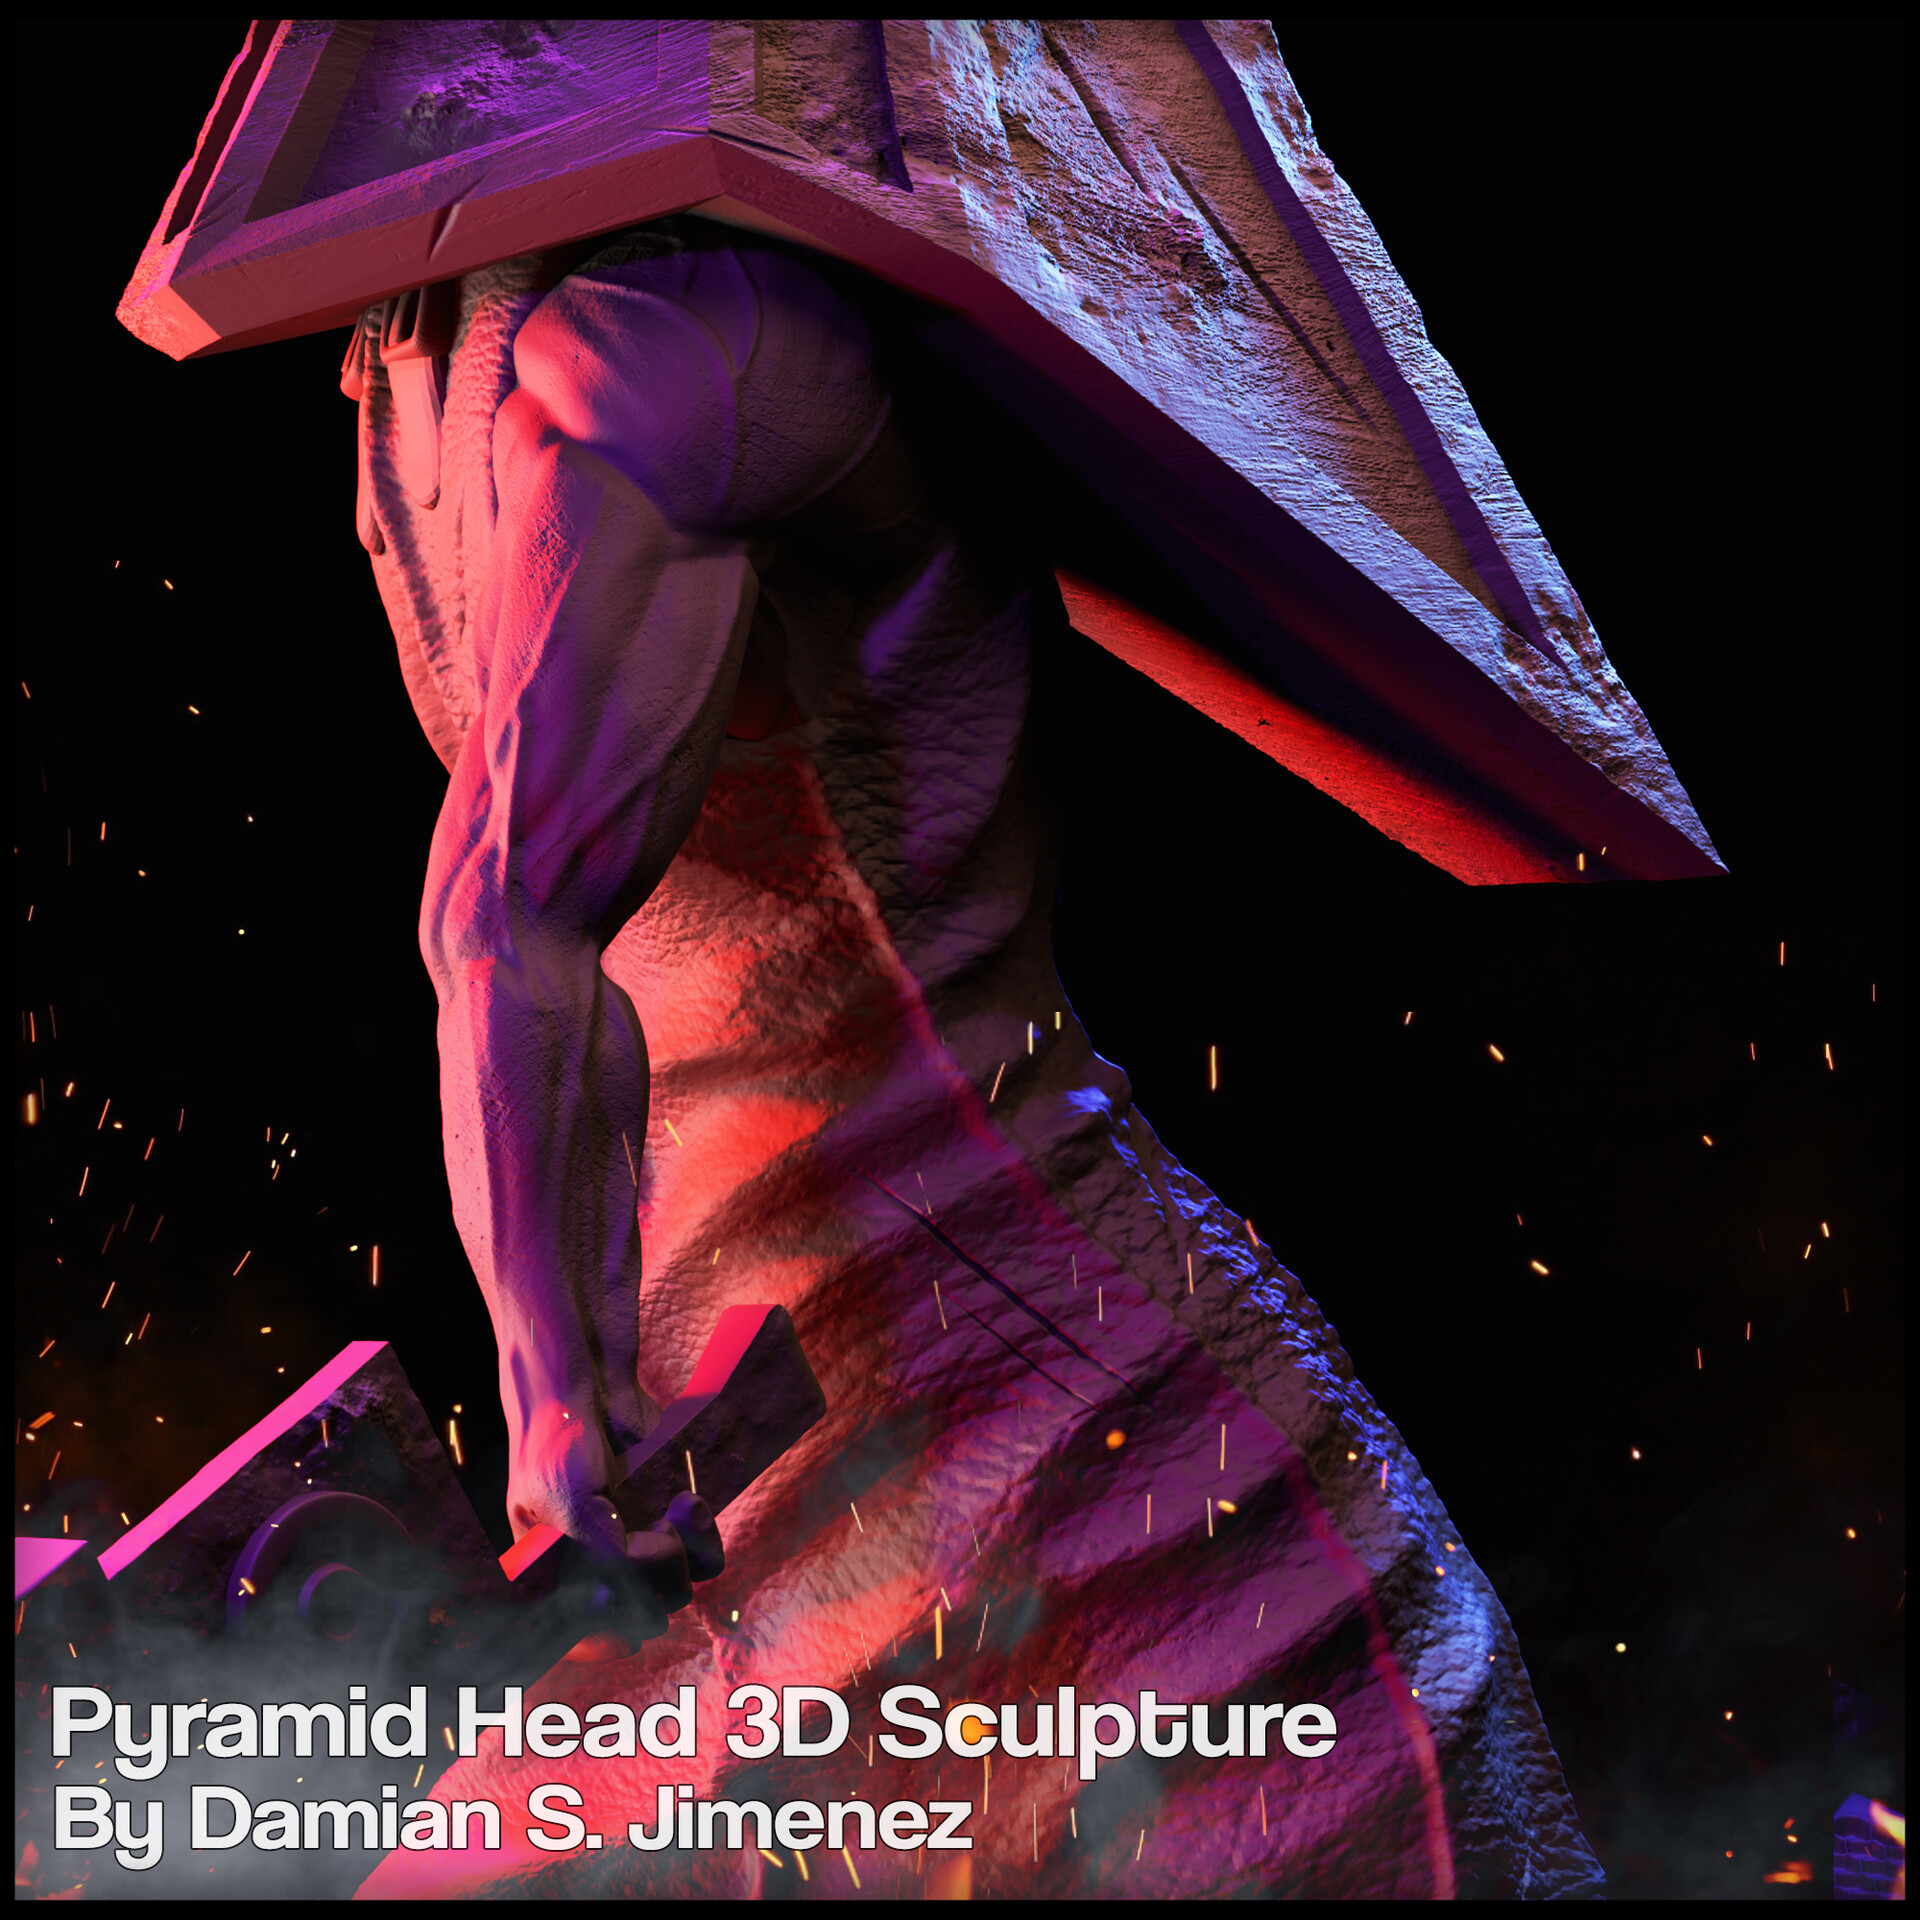 Spider pyramid head - silent hill fan art - Works in Progress - Blender  Artists Community